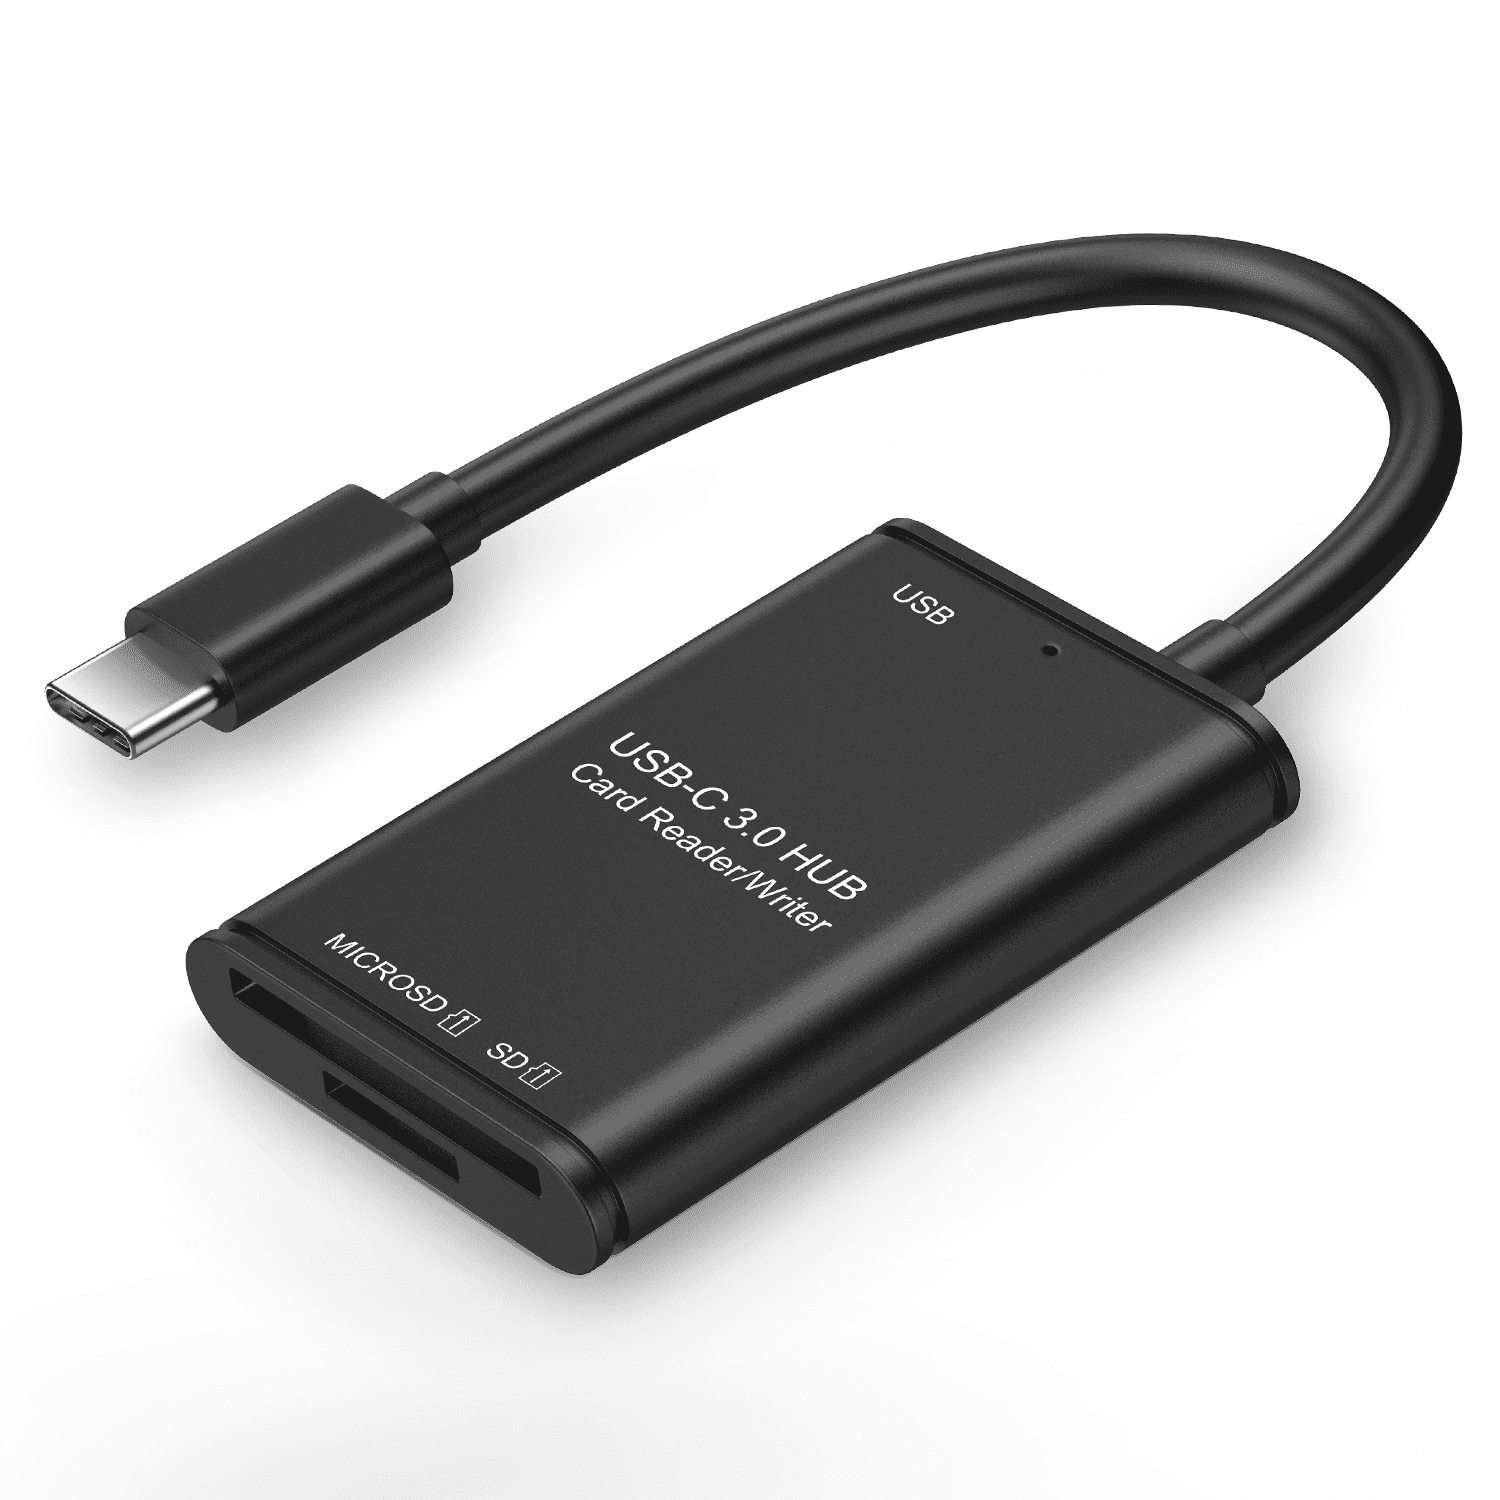 USB-C to SD Card Reader - Apple